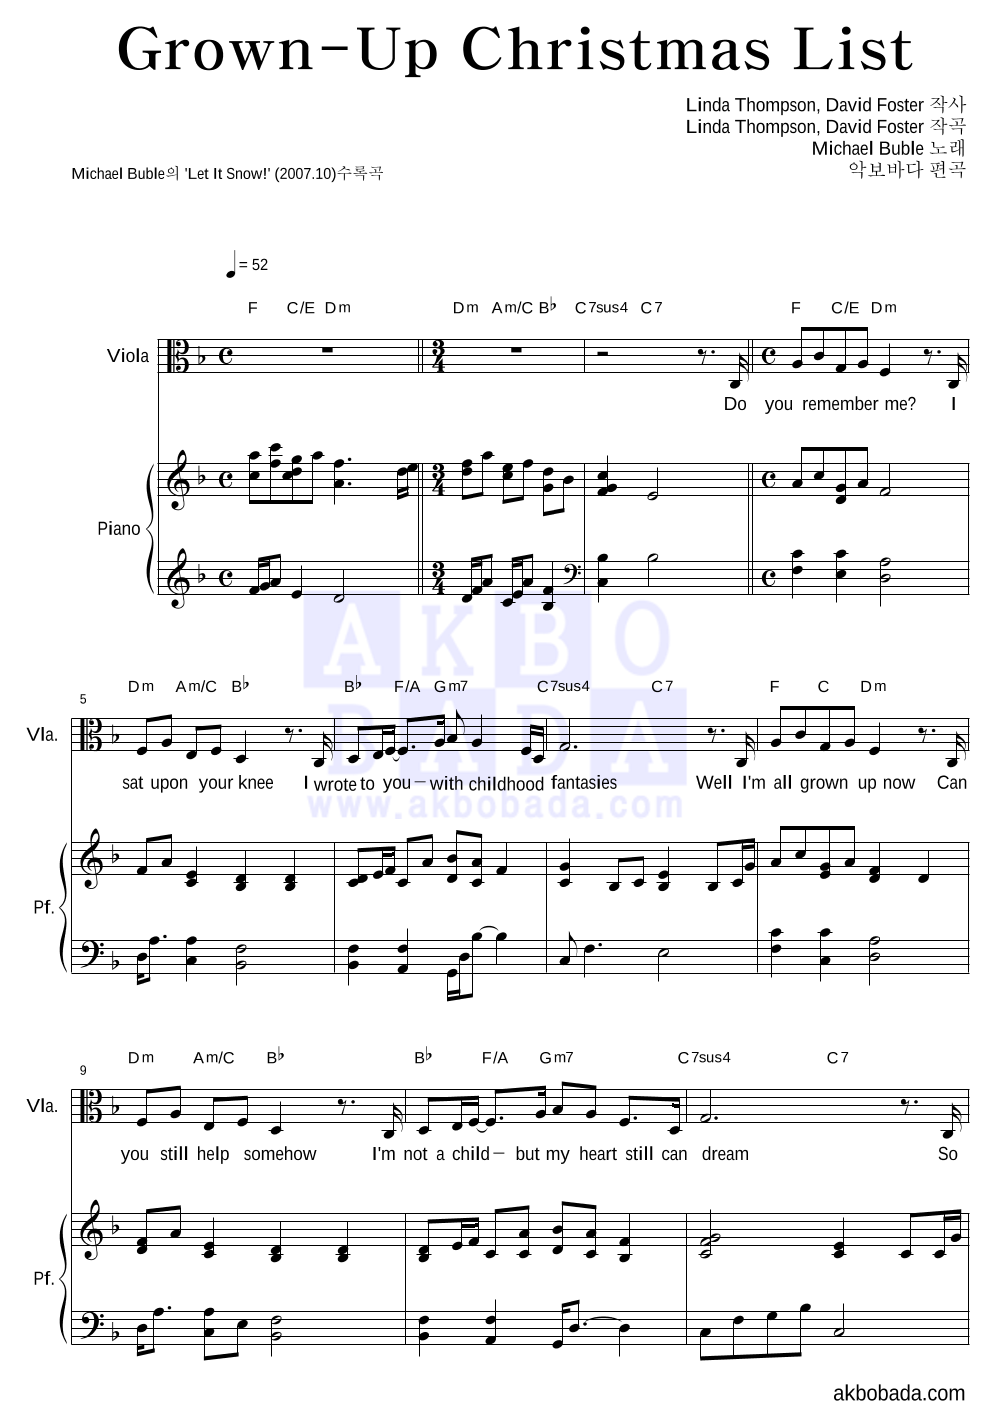 Michael Buble - Grown-Up Christmas List 비올라&피아노 악보 